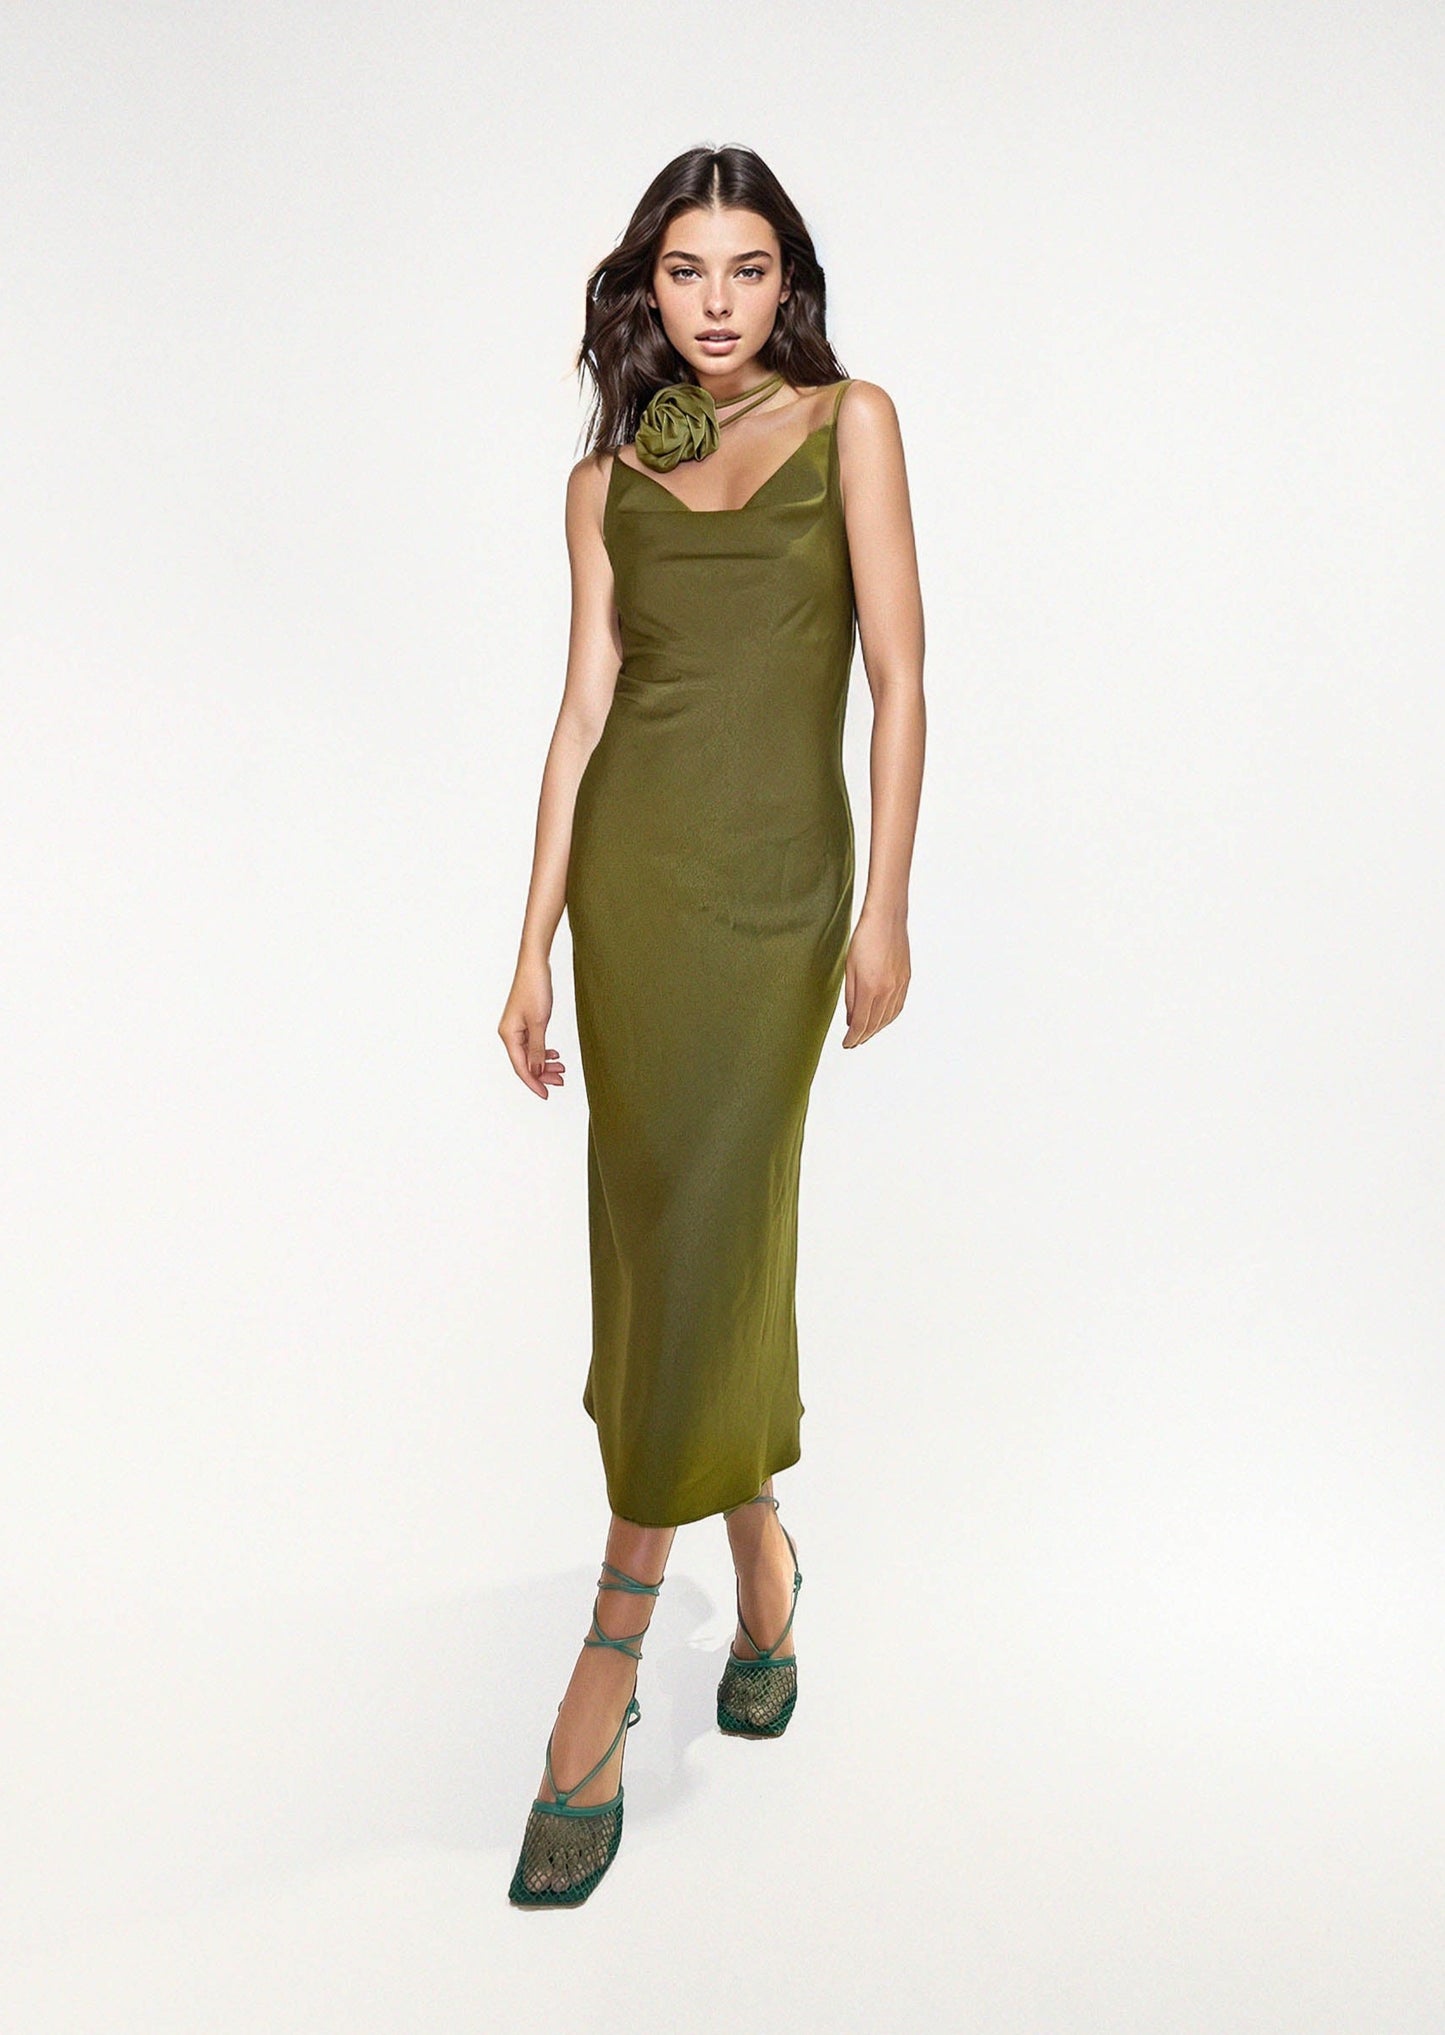 DESIREE DRESS in Olive Green